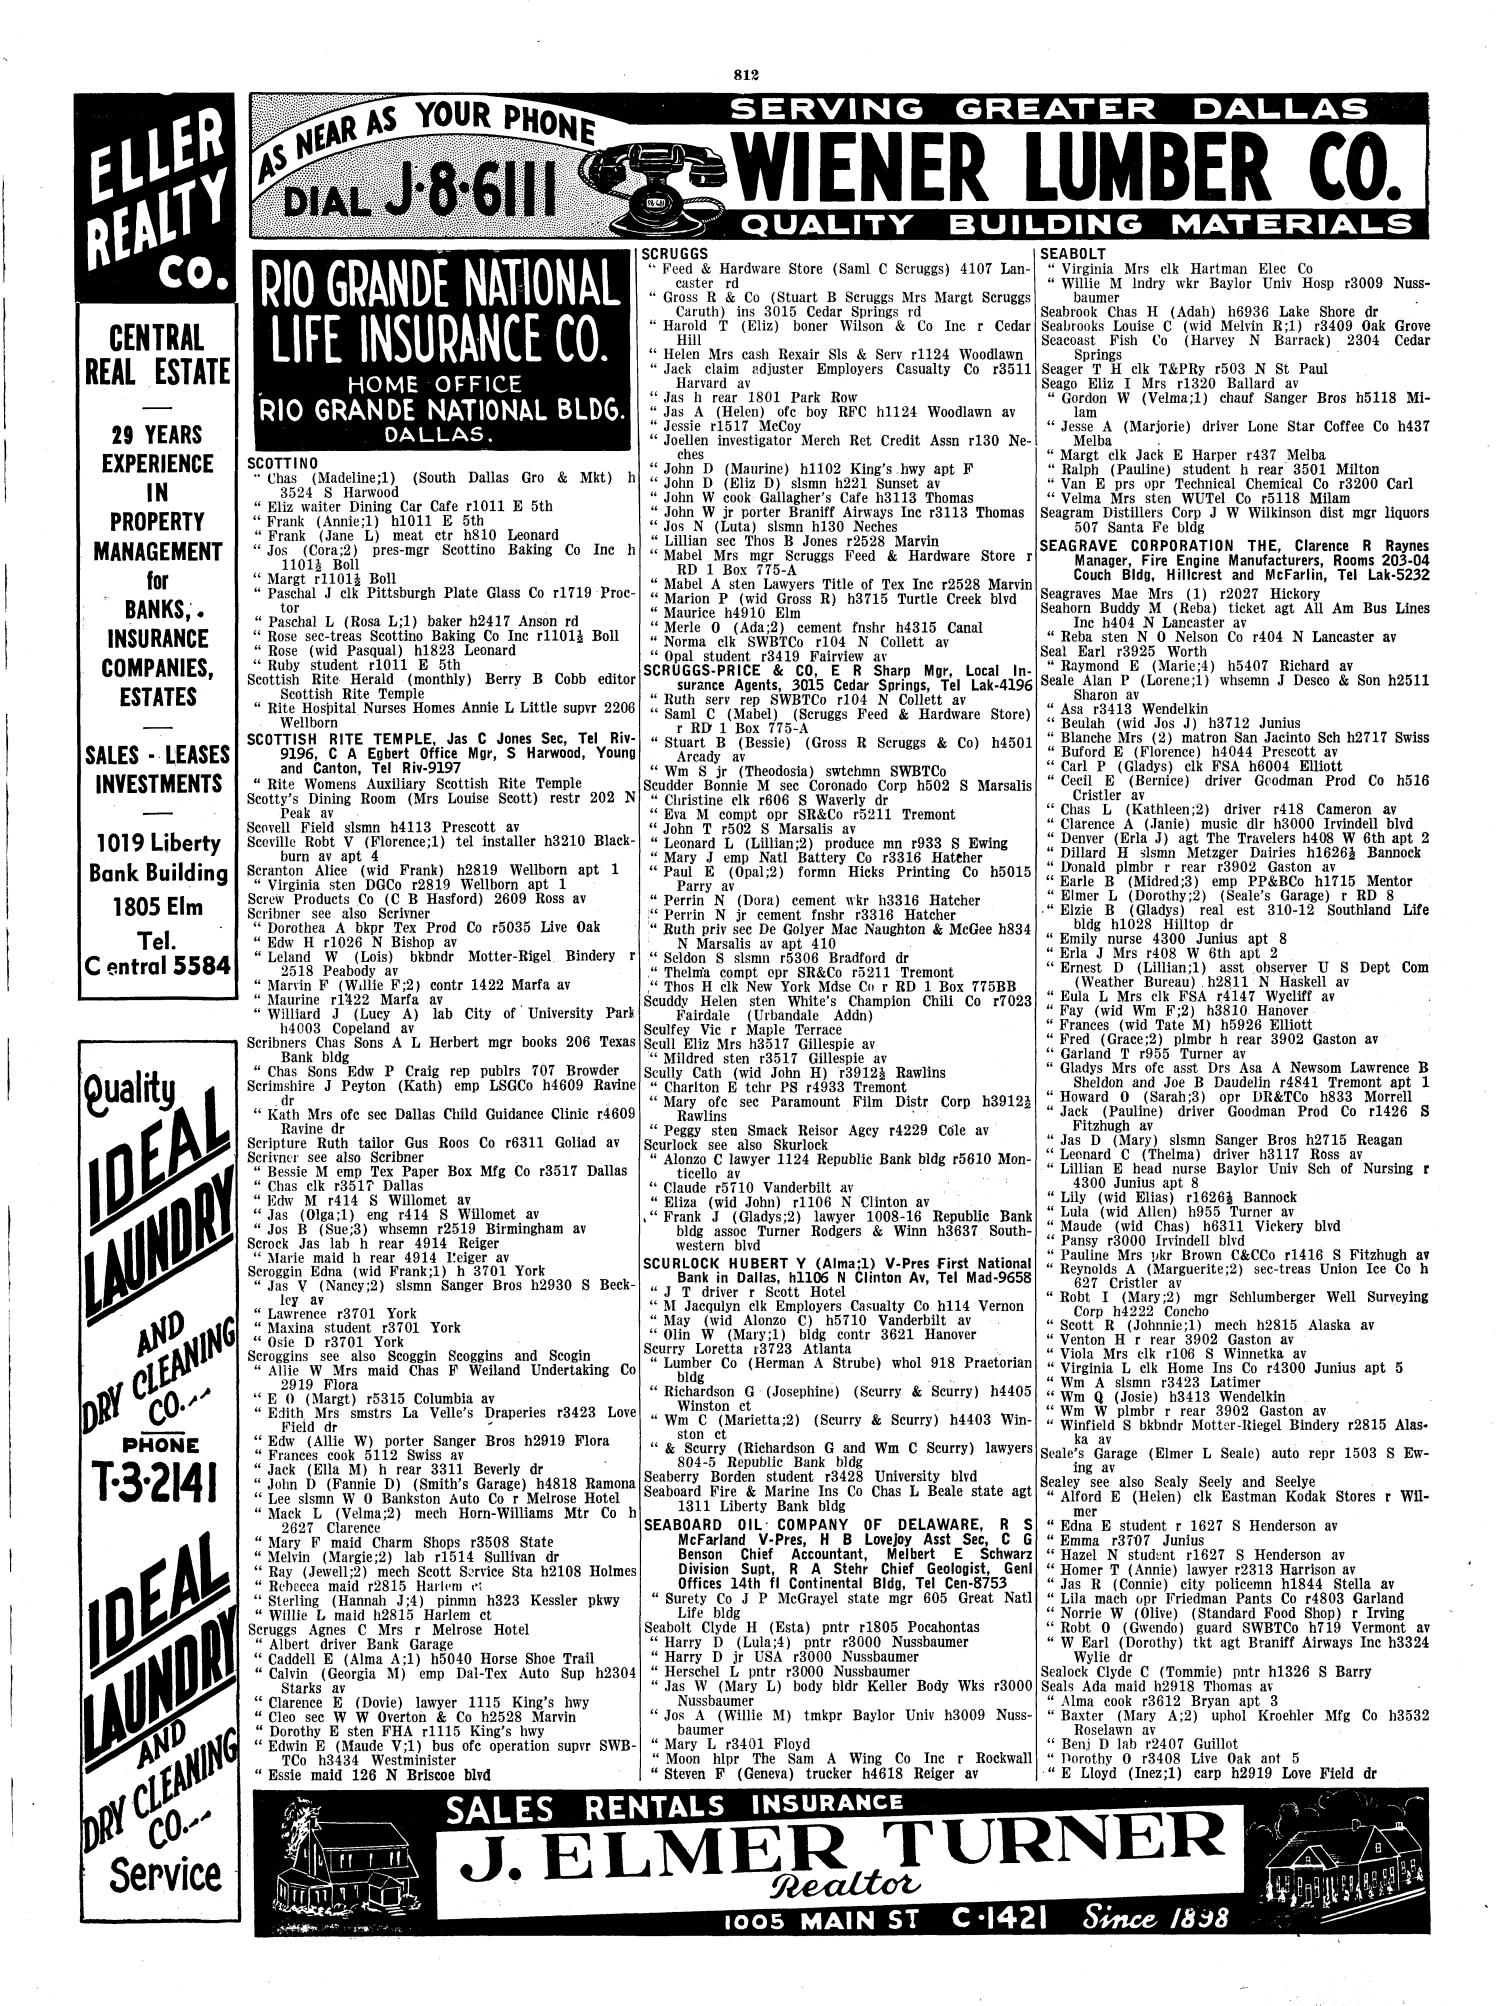 Dallas City Directory, 1941
                                                
                                                    812
                                                